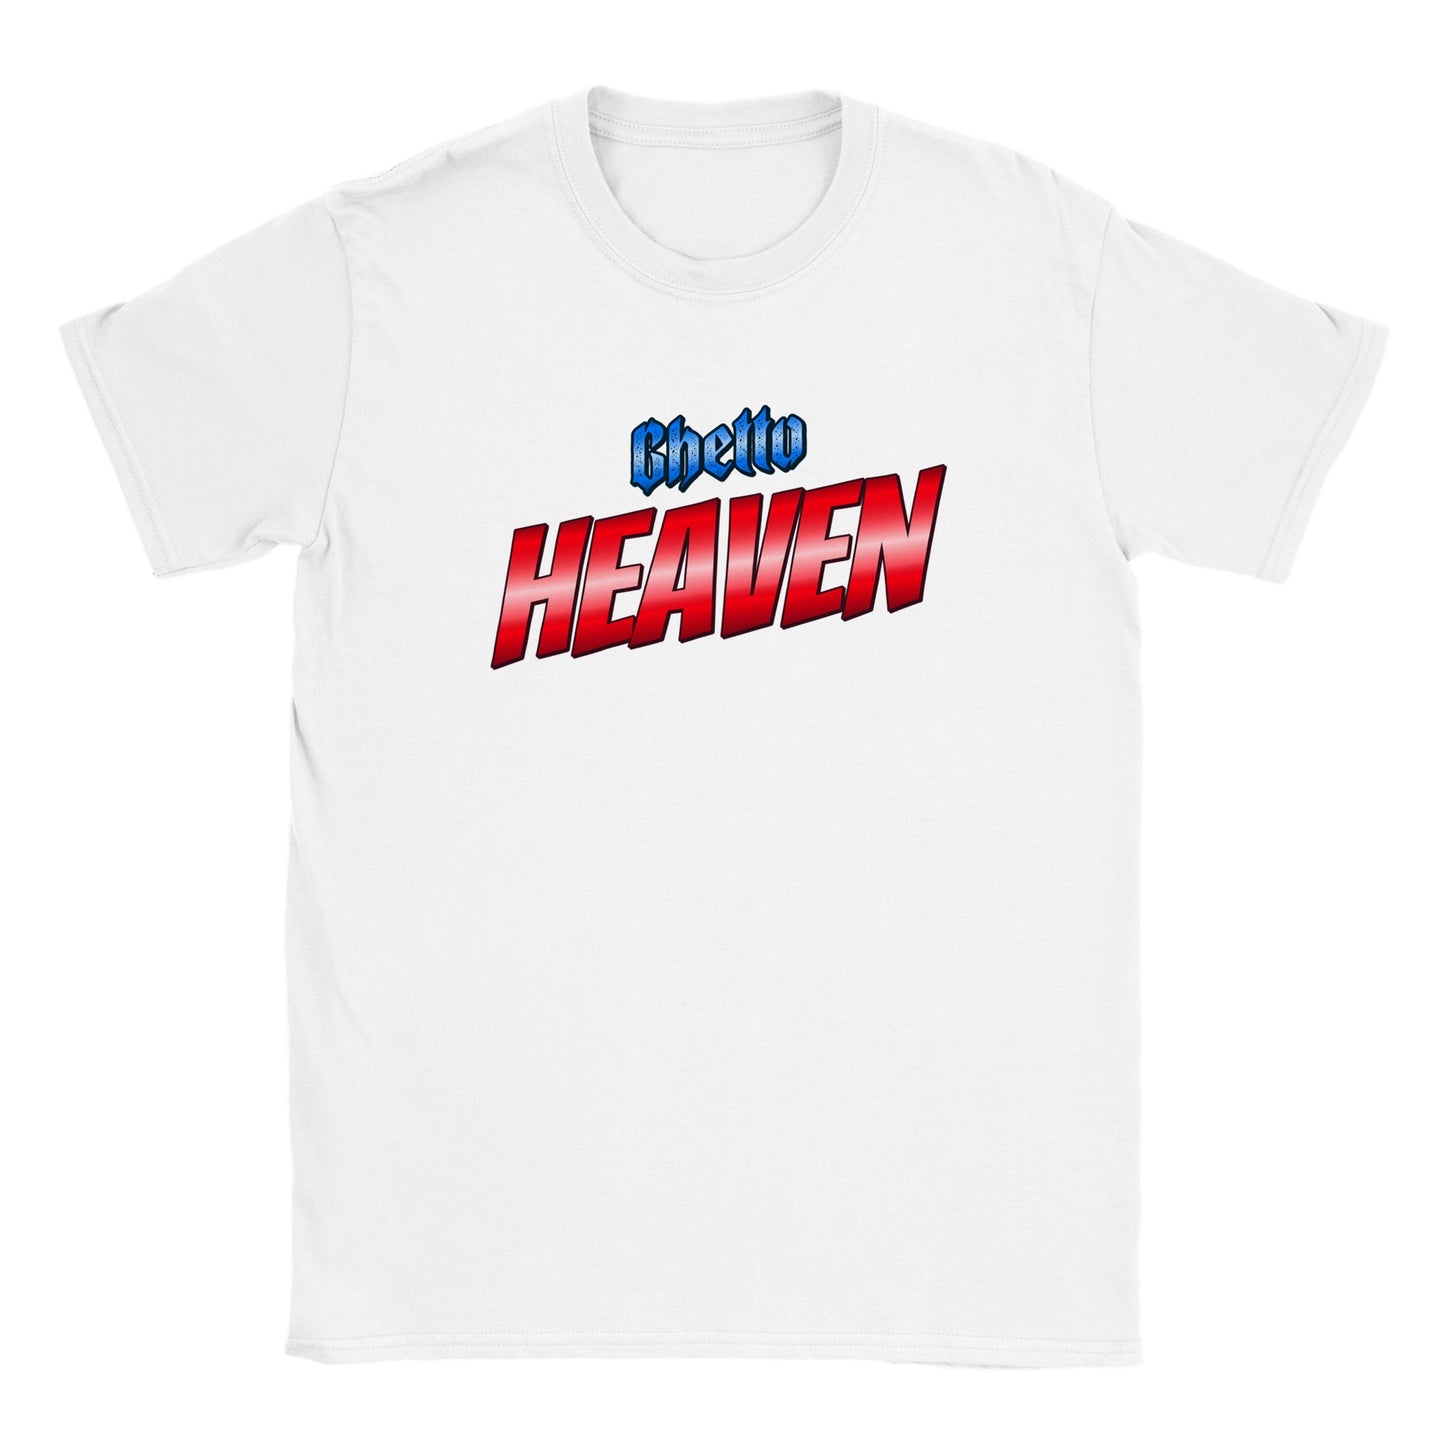 Cool men’s t-shirts uk - Dress Hood Street-Ghetto Heaven 